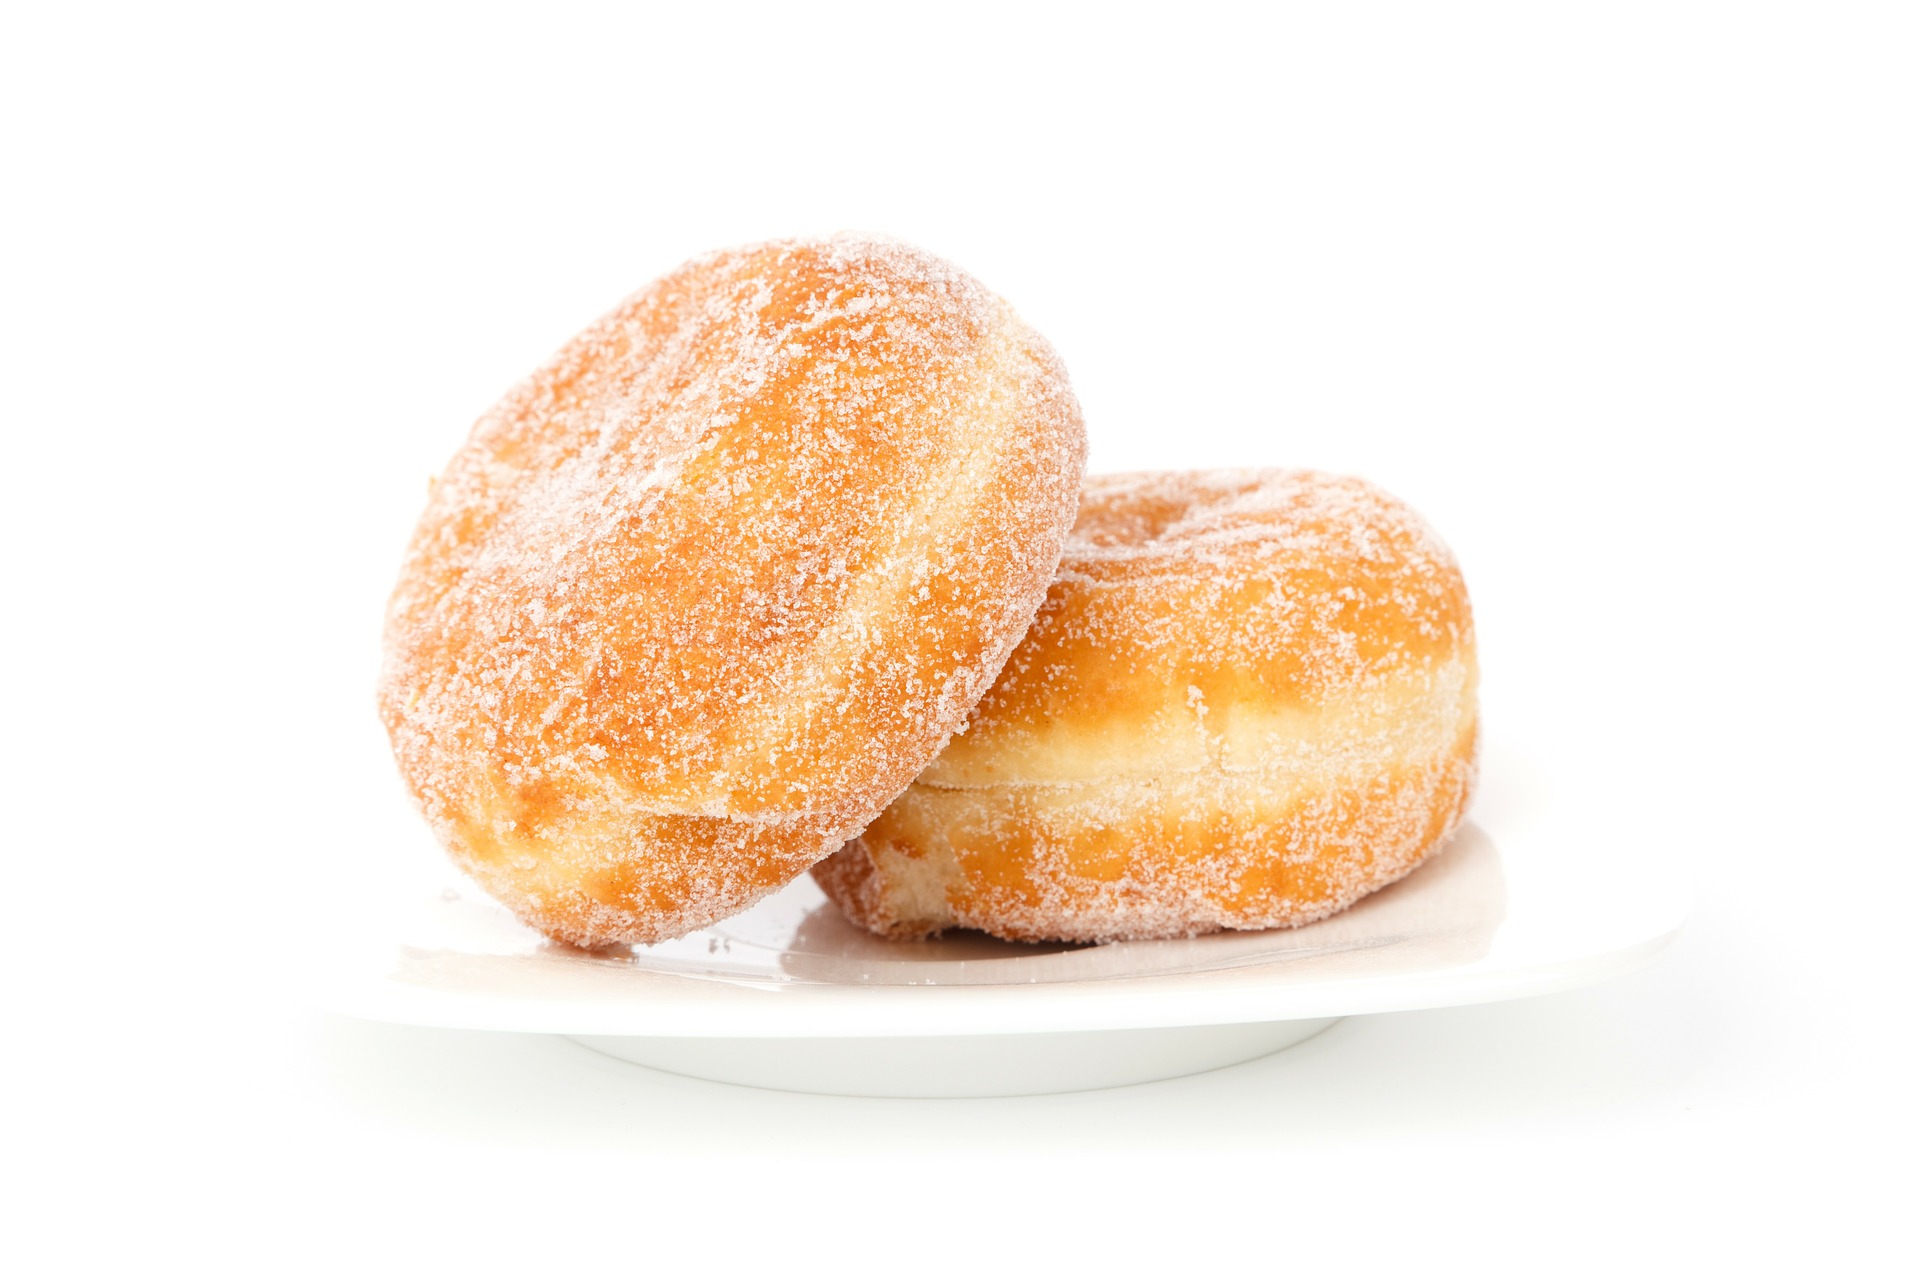 Sugar covered donuts